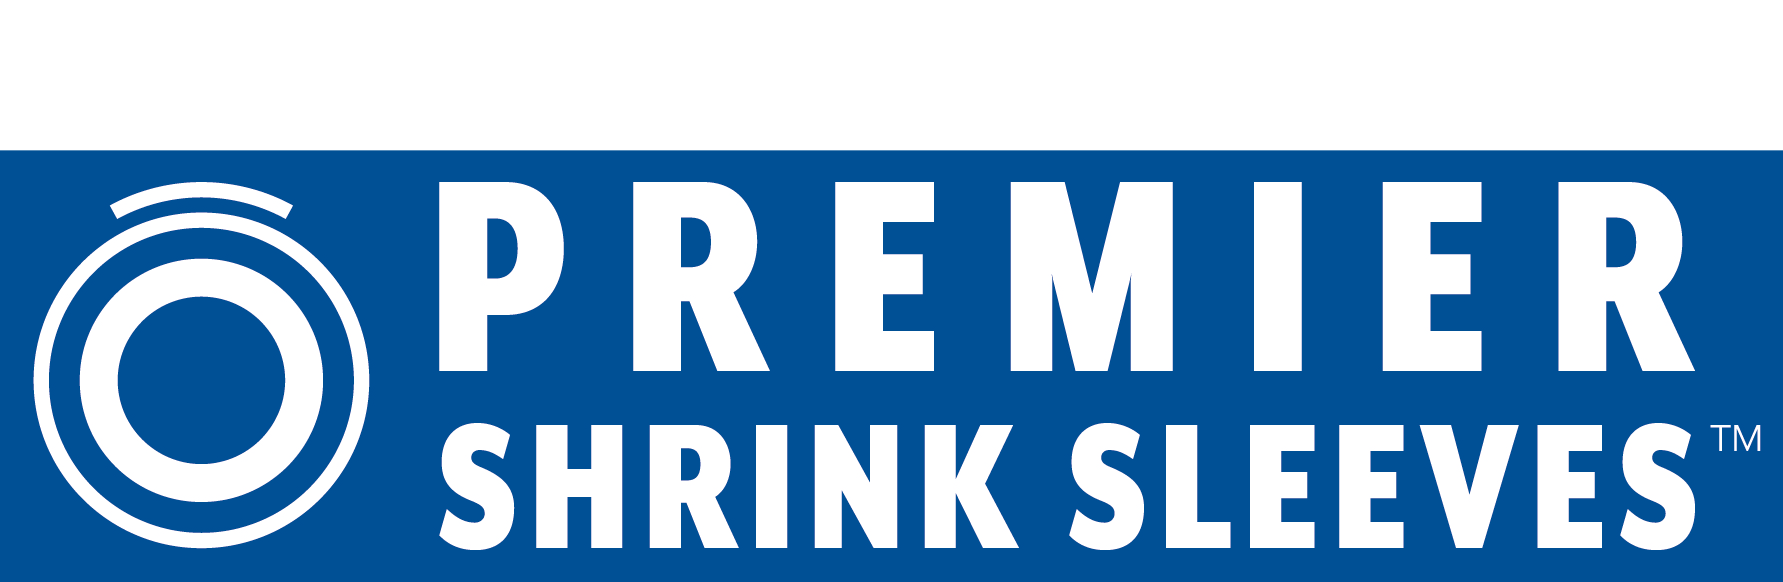 Premier Shrink Sleeve CMYK No Tagline - Denso